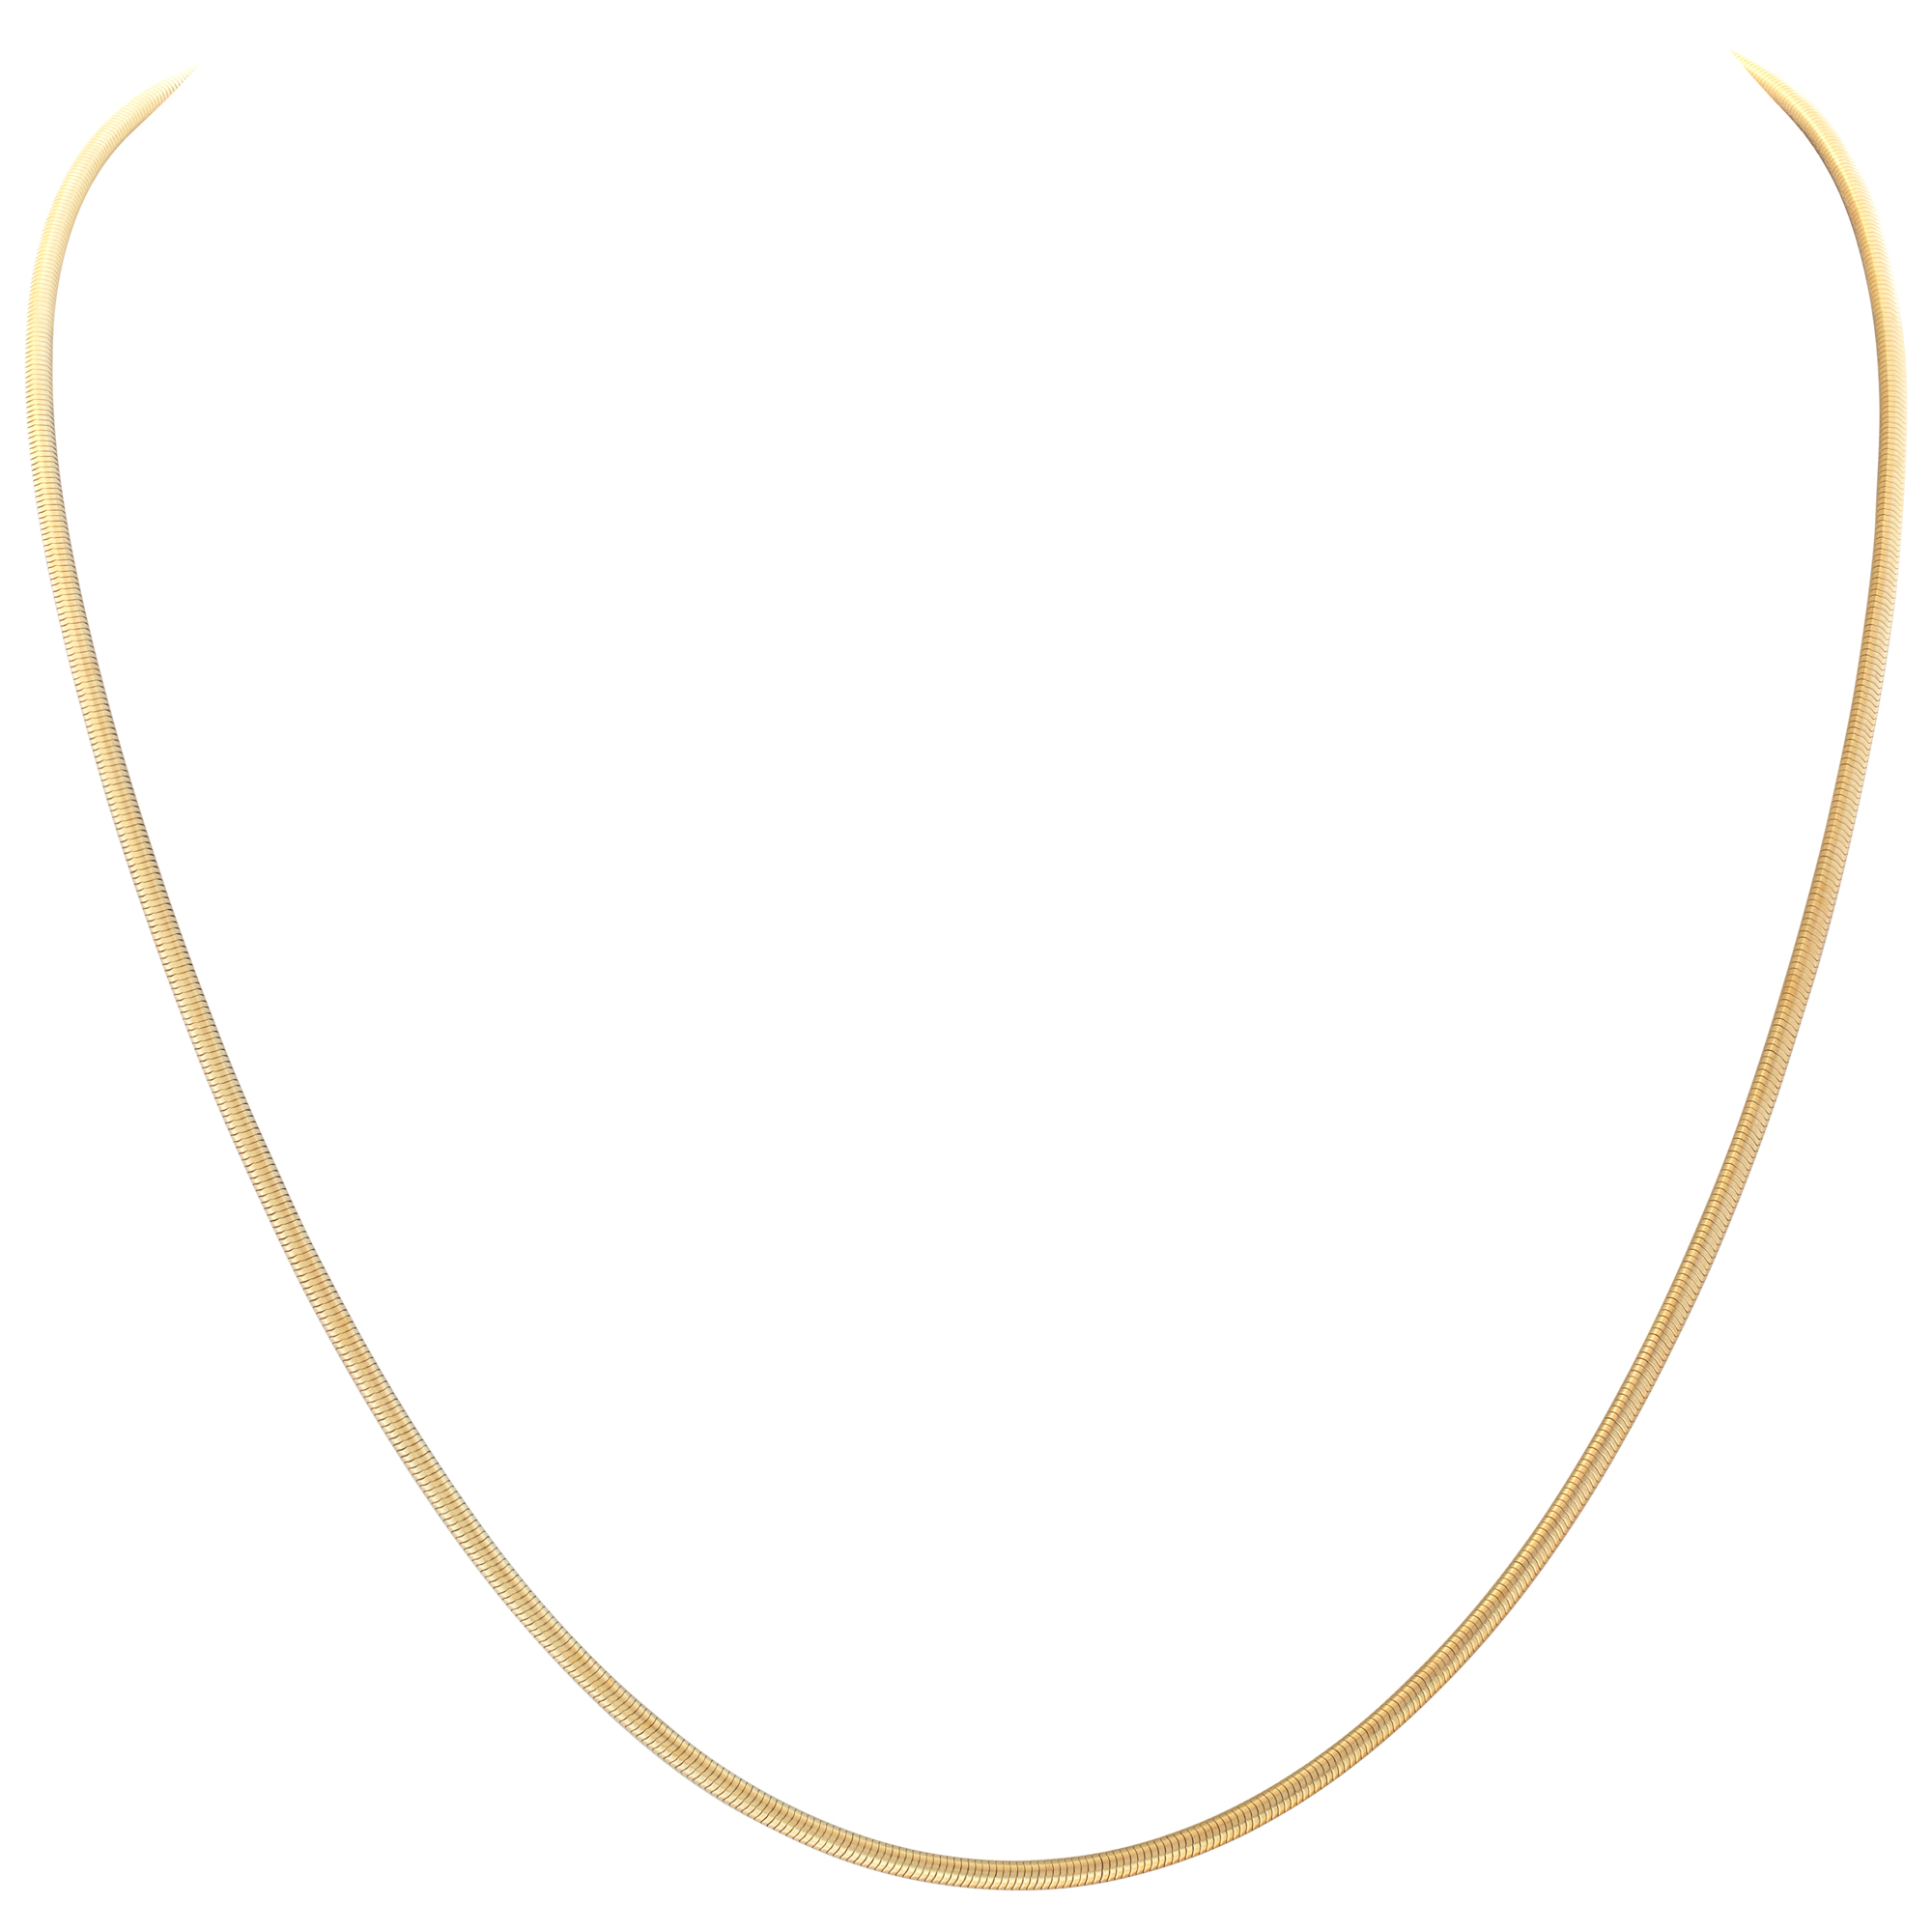 Thin 18k yellow gold snake chain image 1